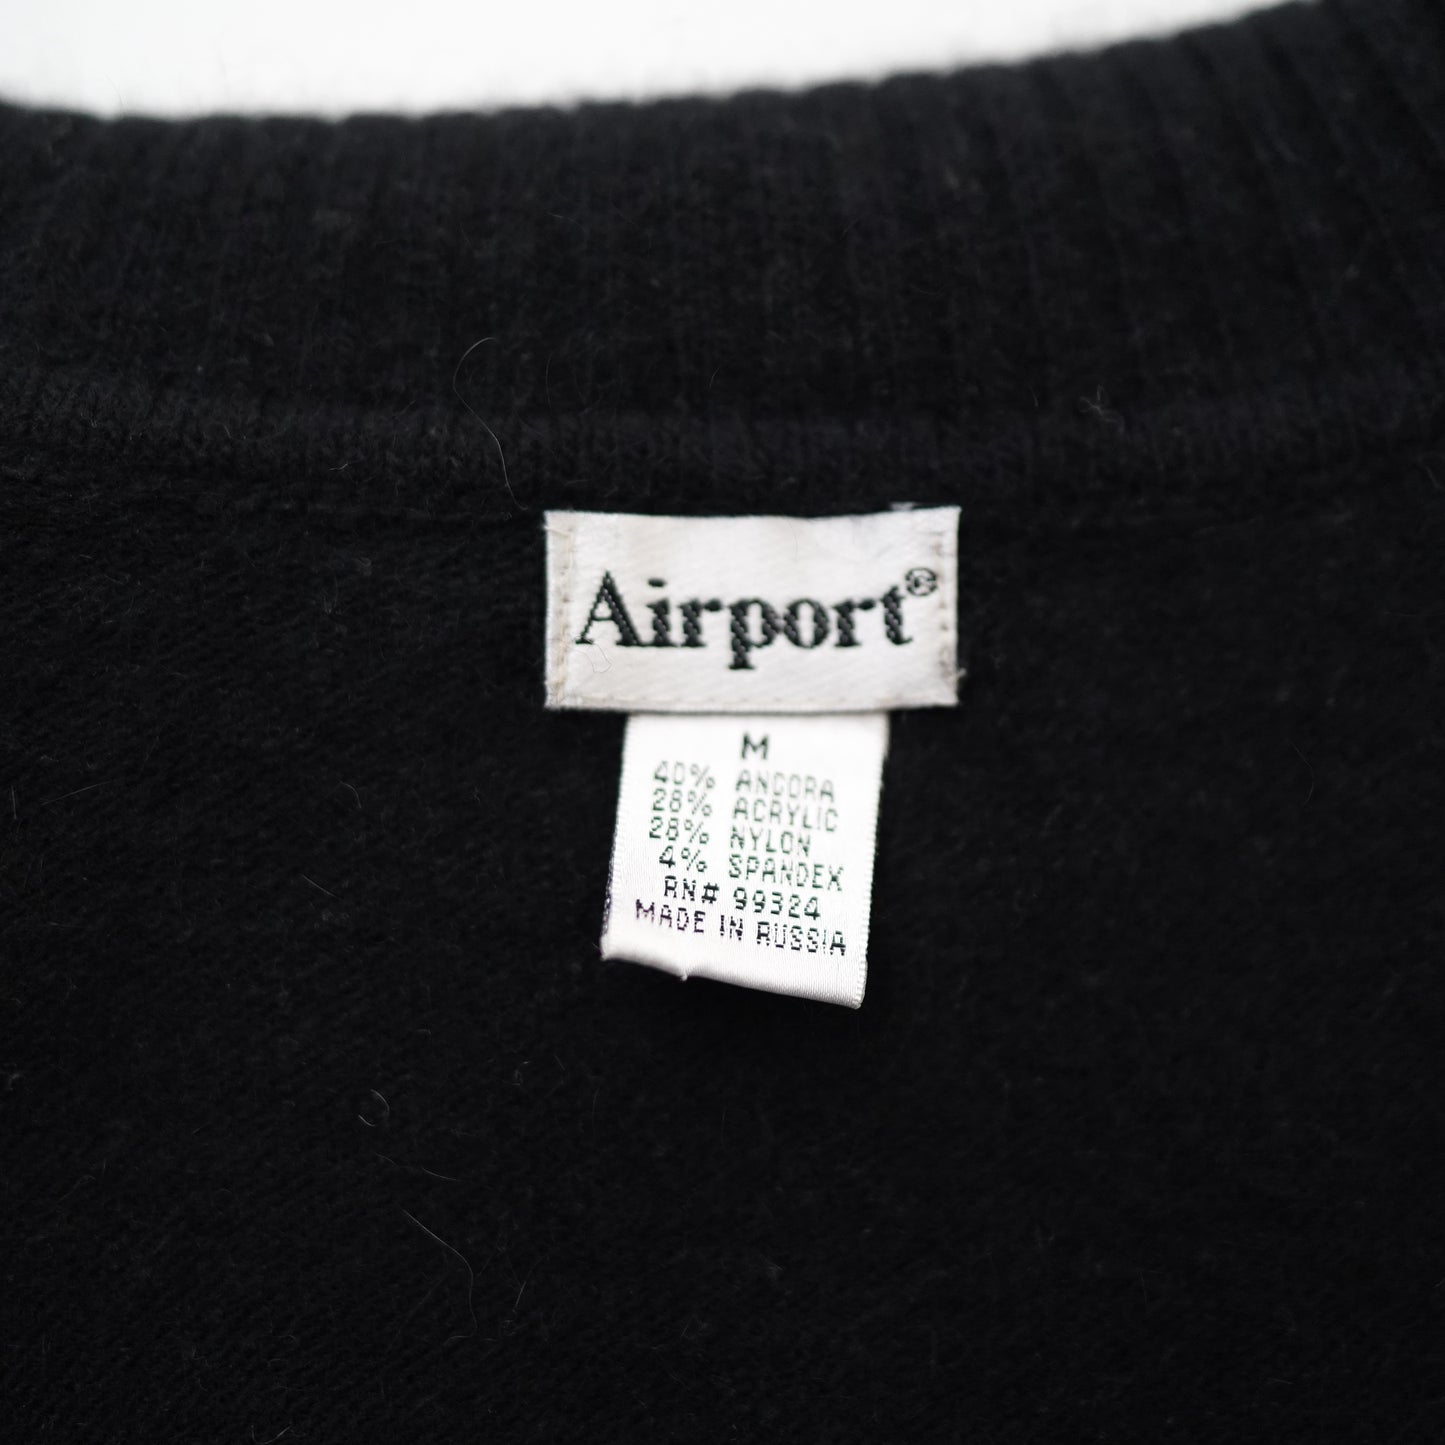 Airport turtleneck sweater